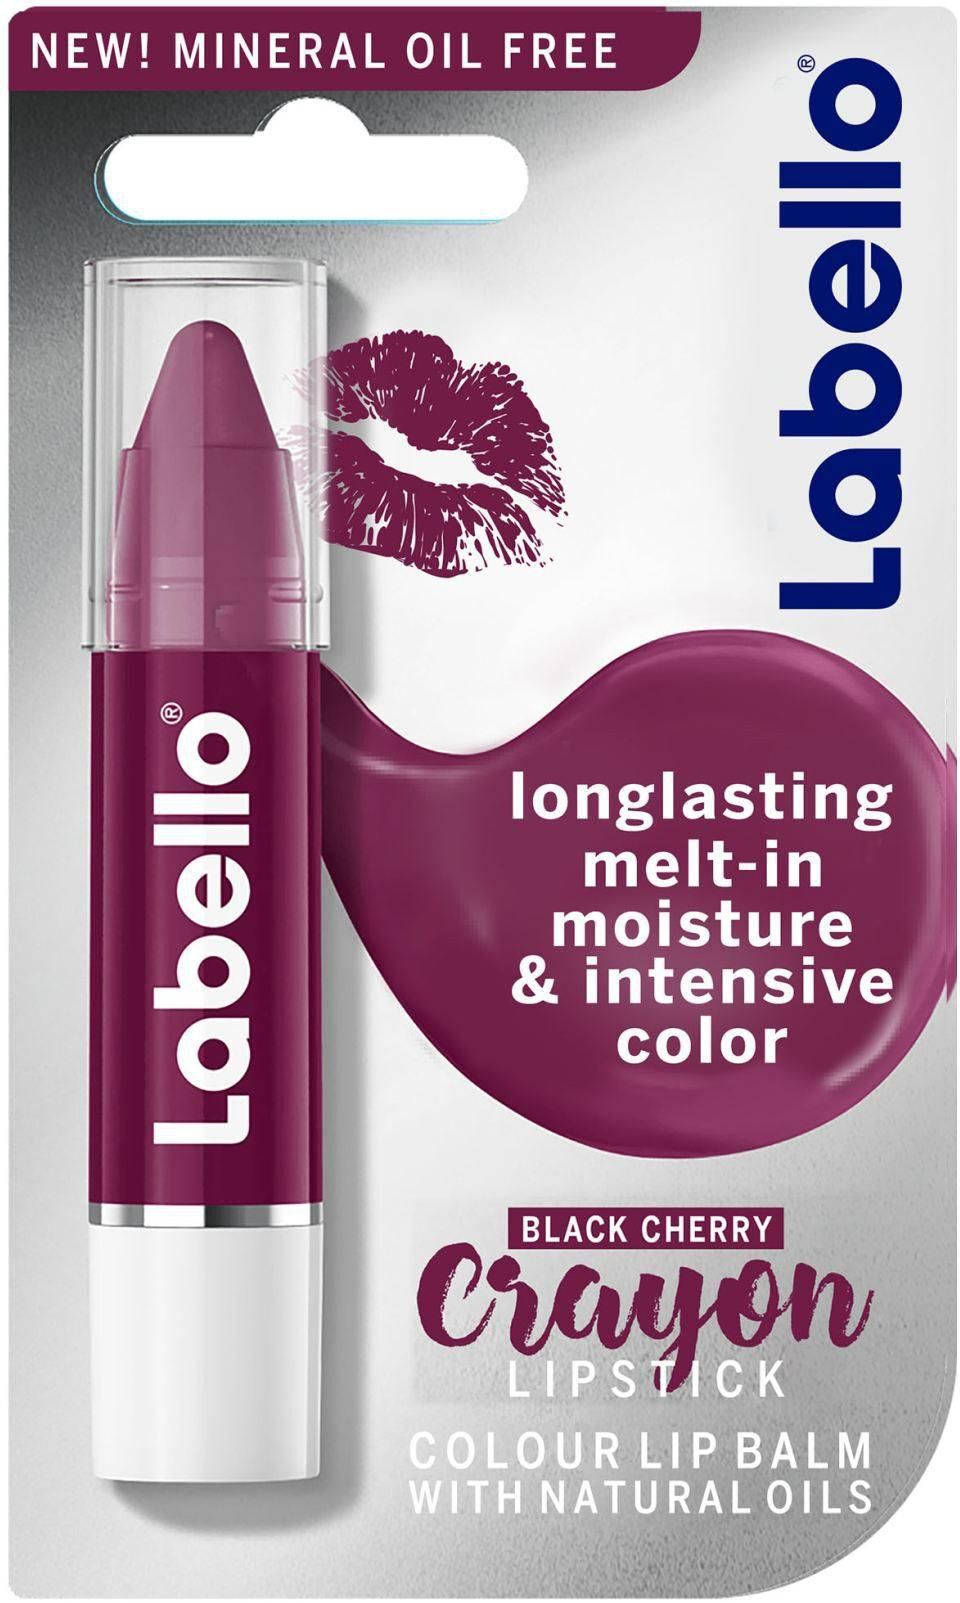 Labello Lipstick Crayon Colour Lip Balm Black Cherry 3g